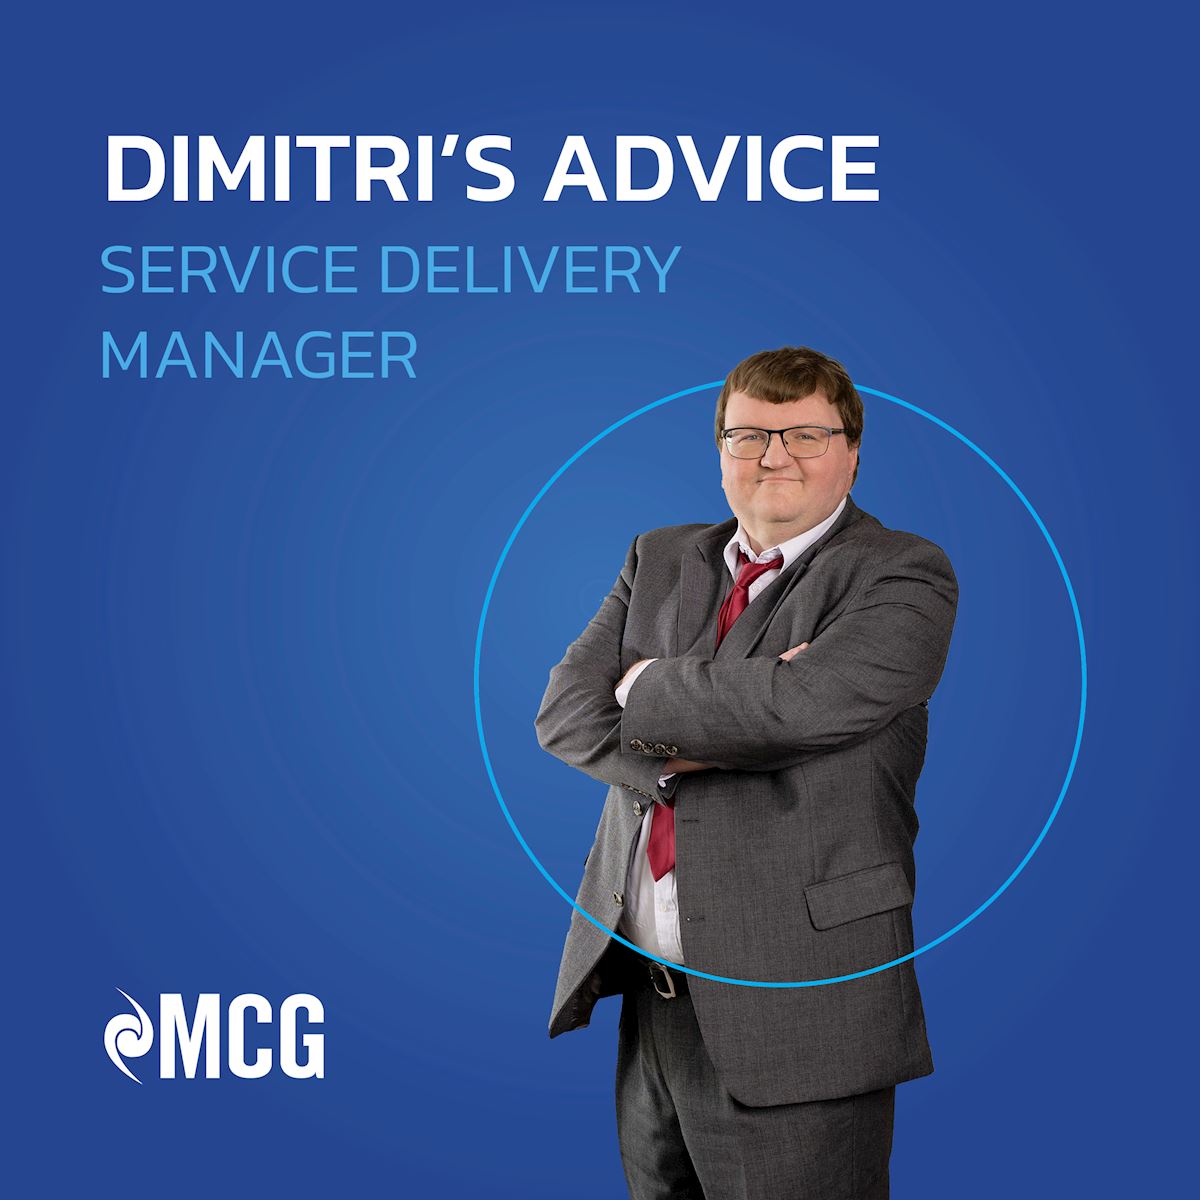 The Dimitri's Advice